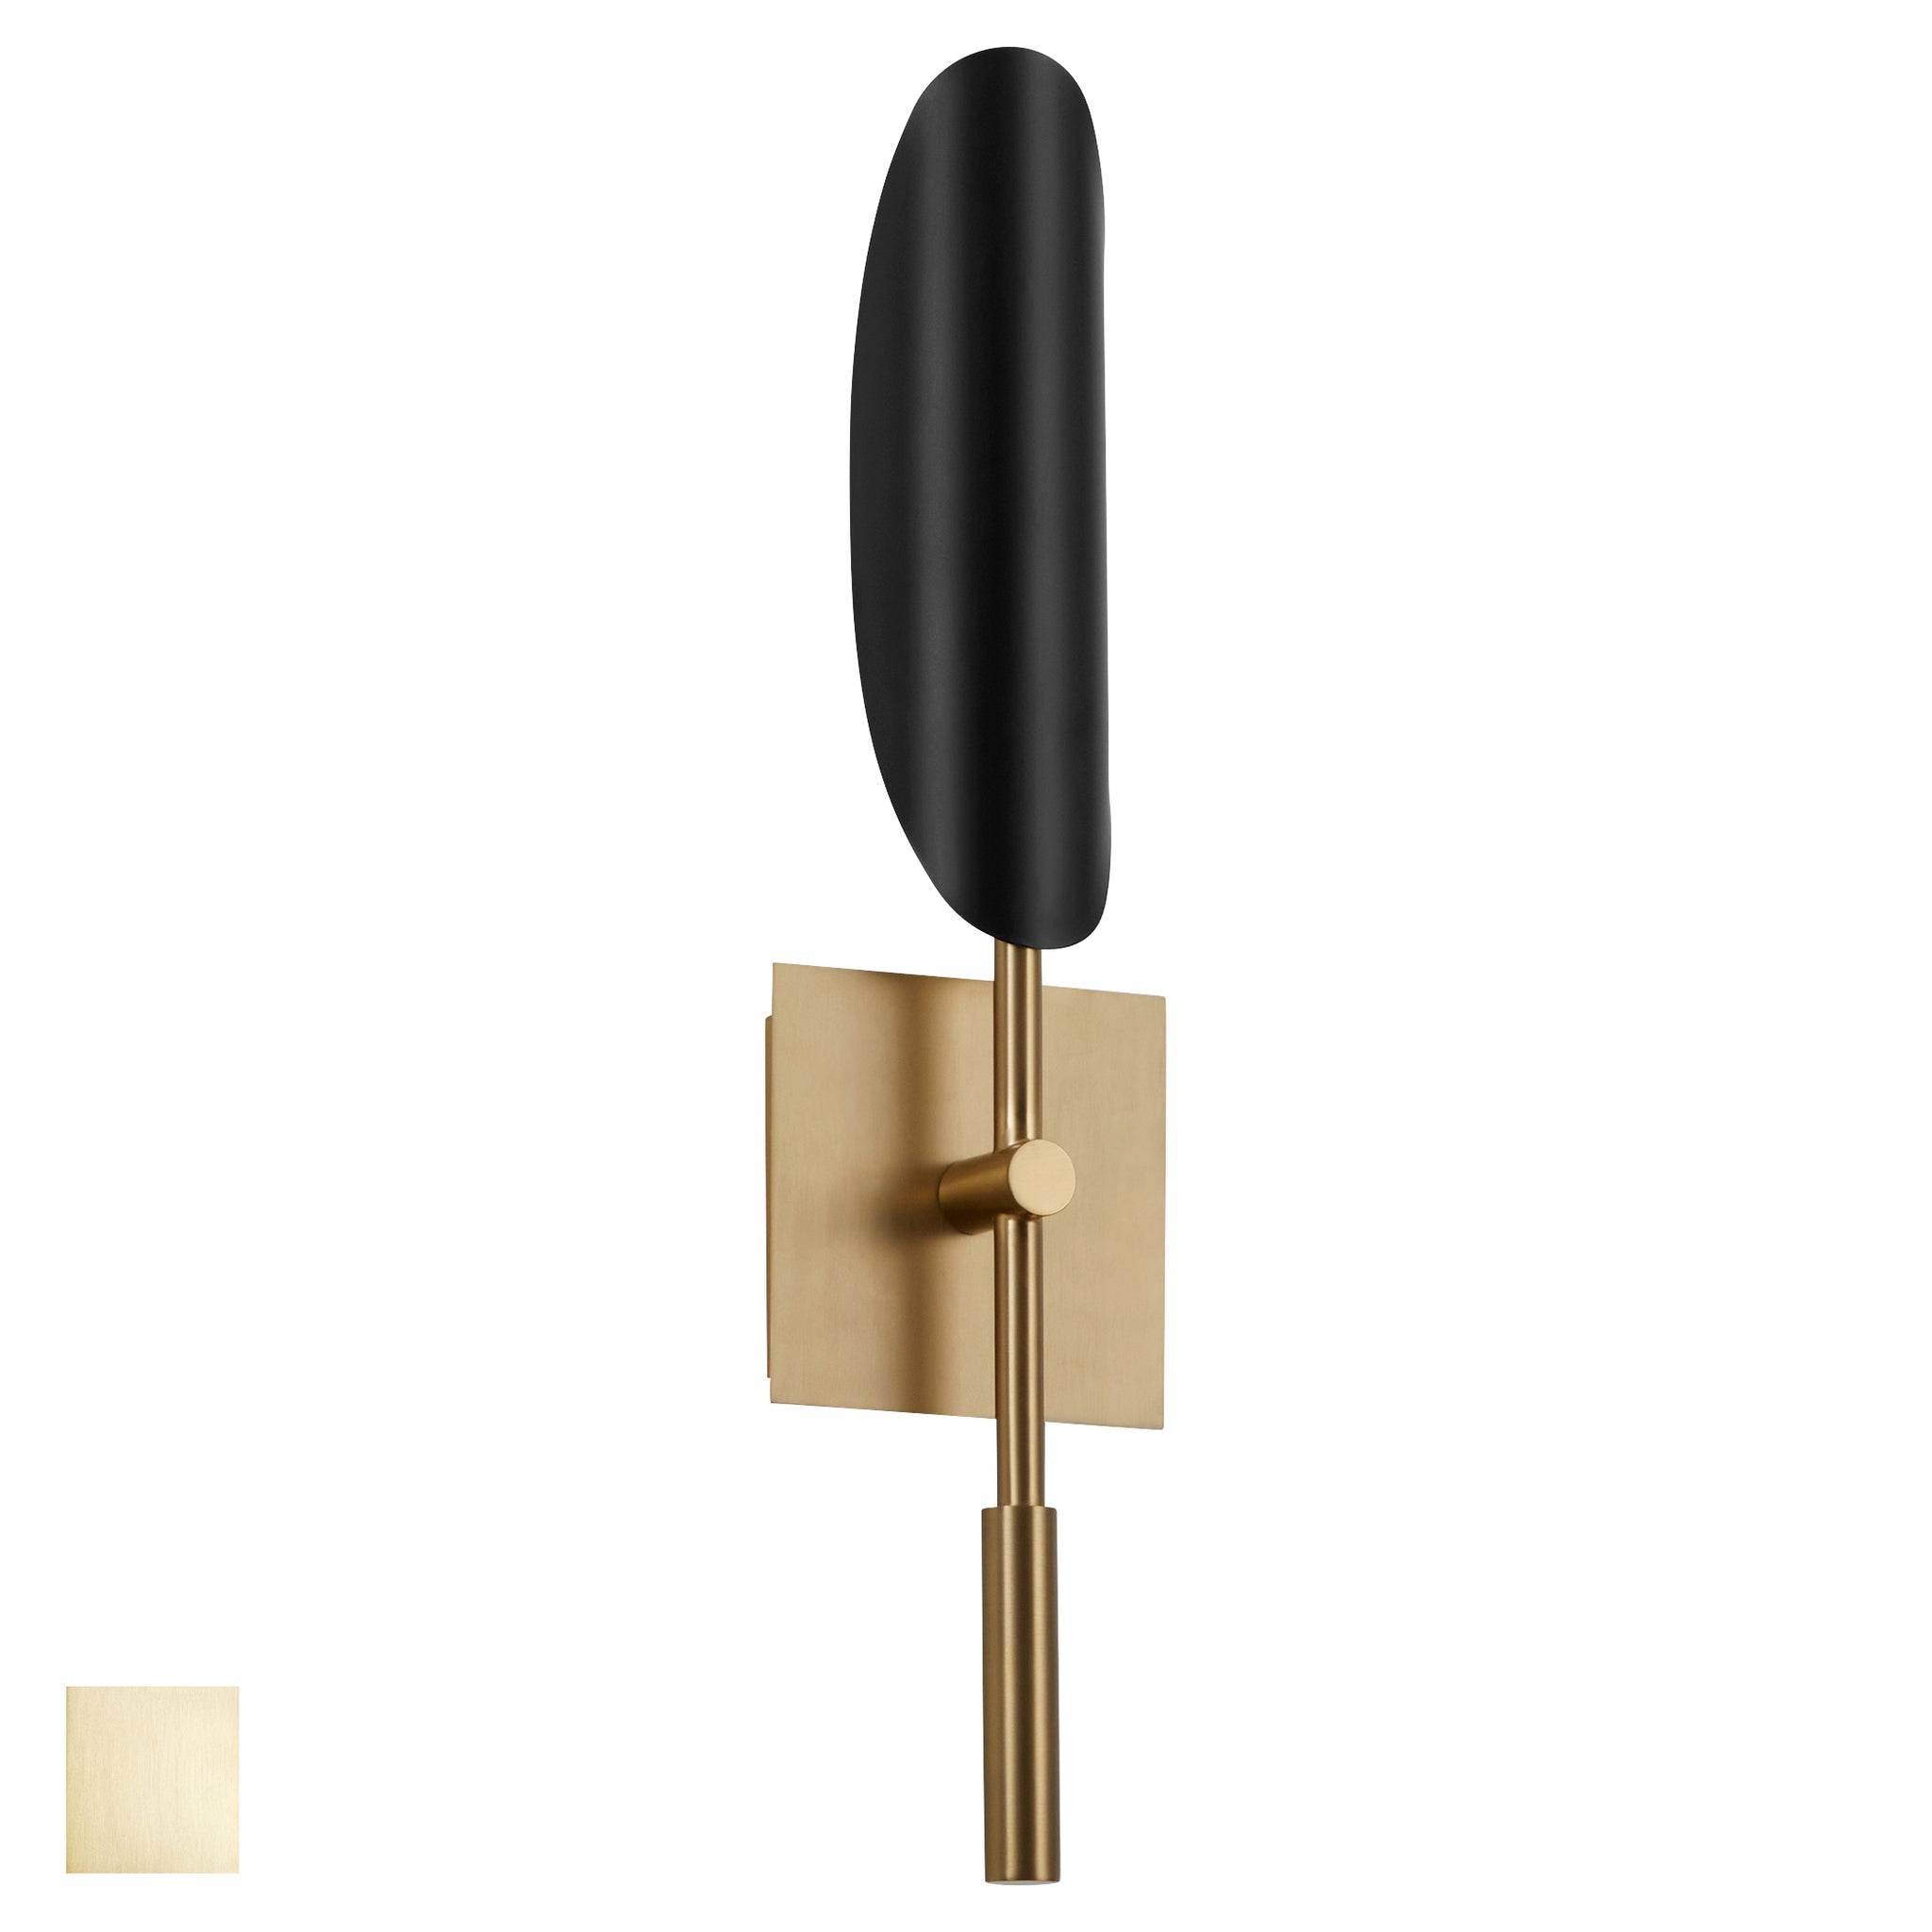 Oxygen PIVOT 3-405-40 LED Wall Sconce Light Fixture - Aged Brass